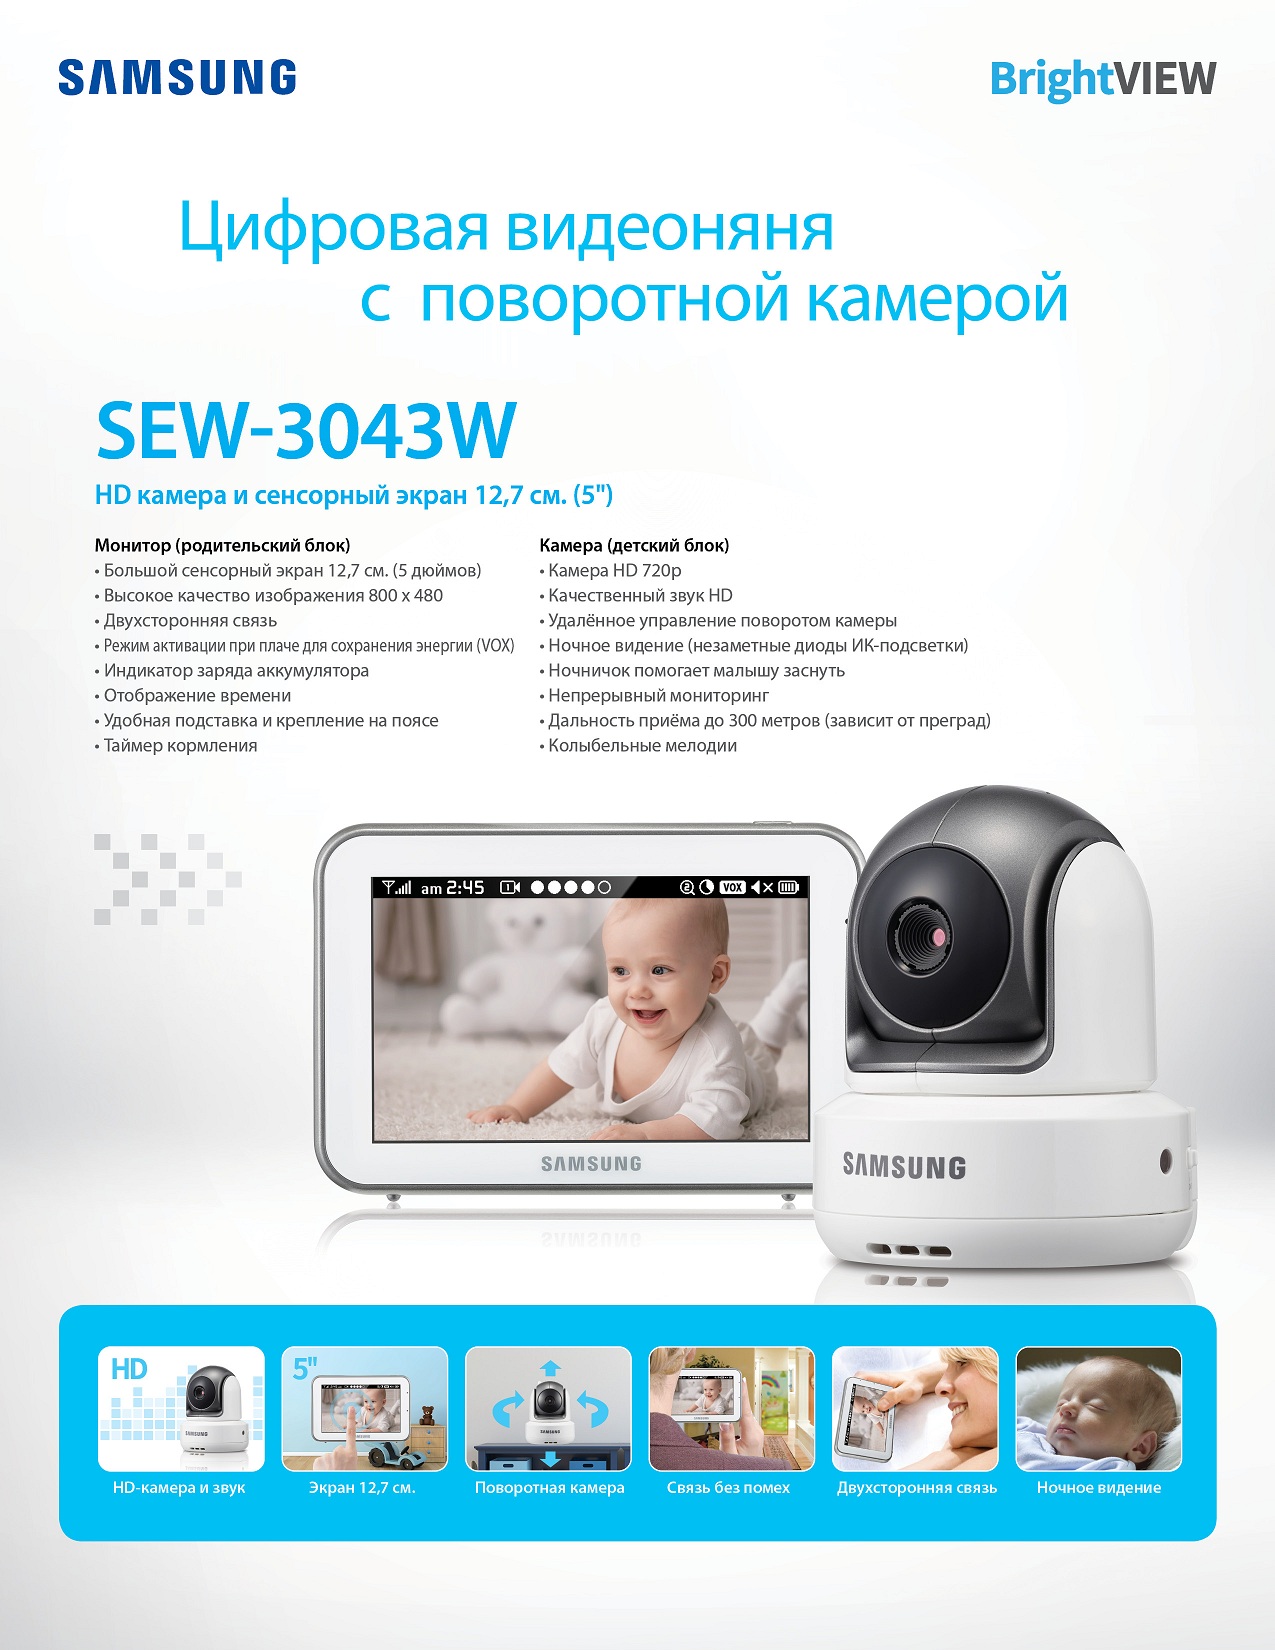 Видеоняня с 4-мя камерами Samsung SEW-3043WPX4 